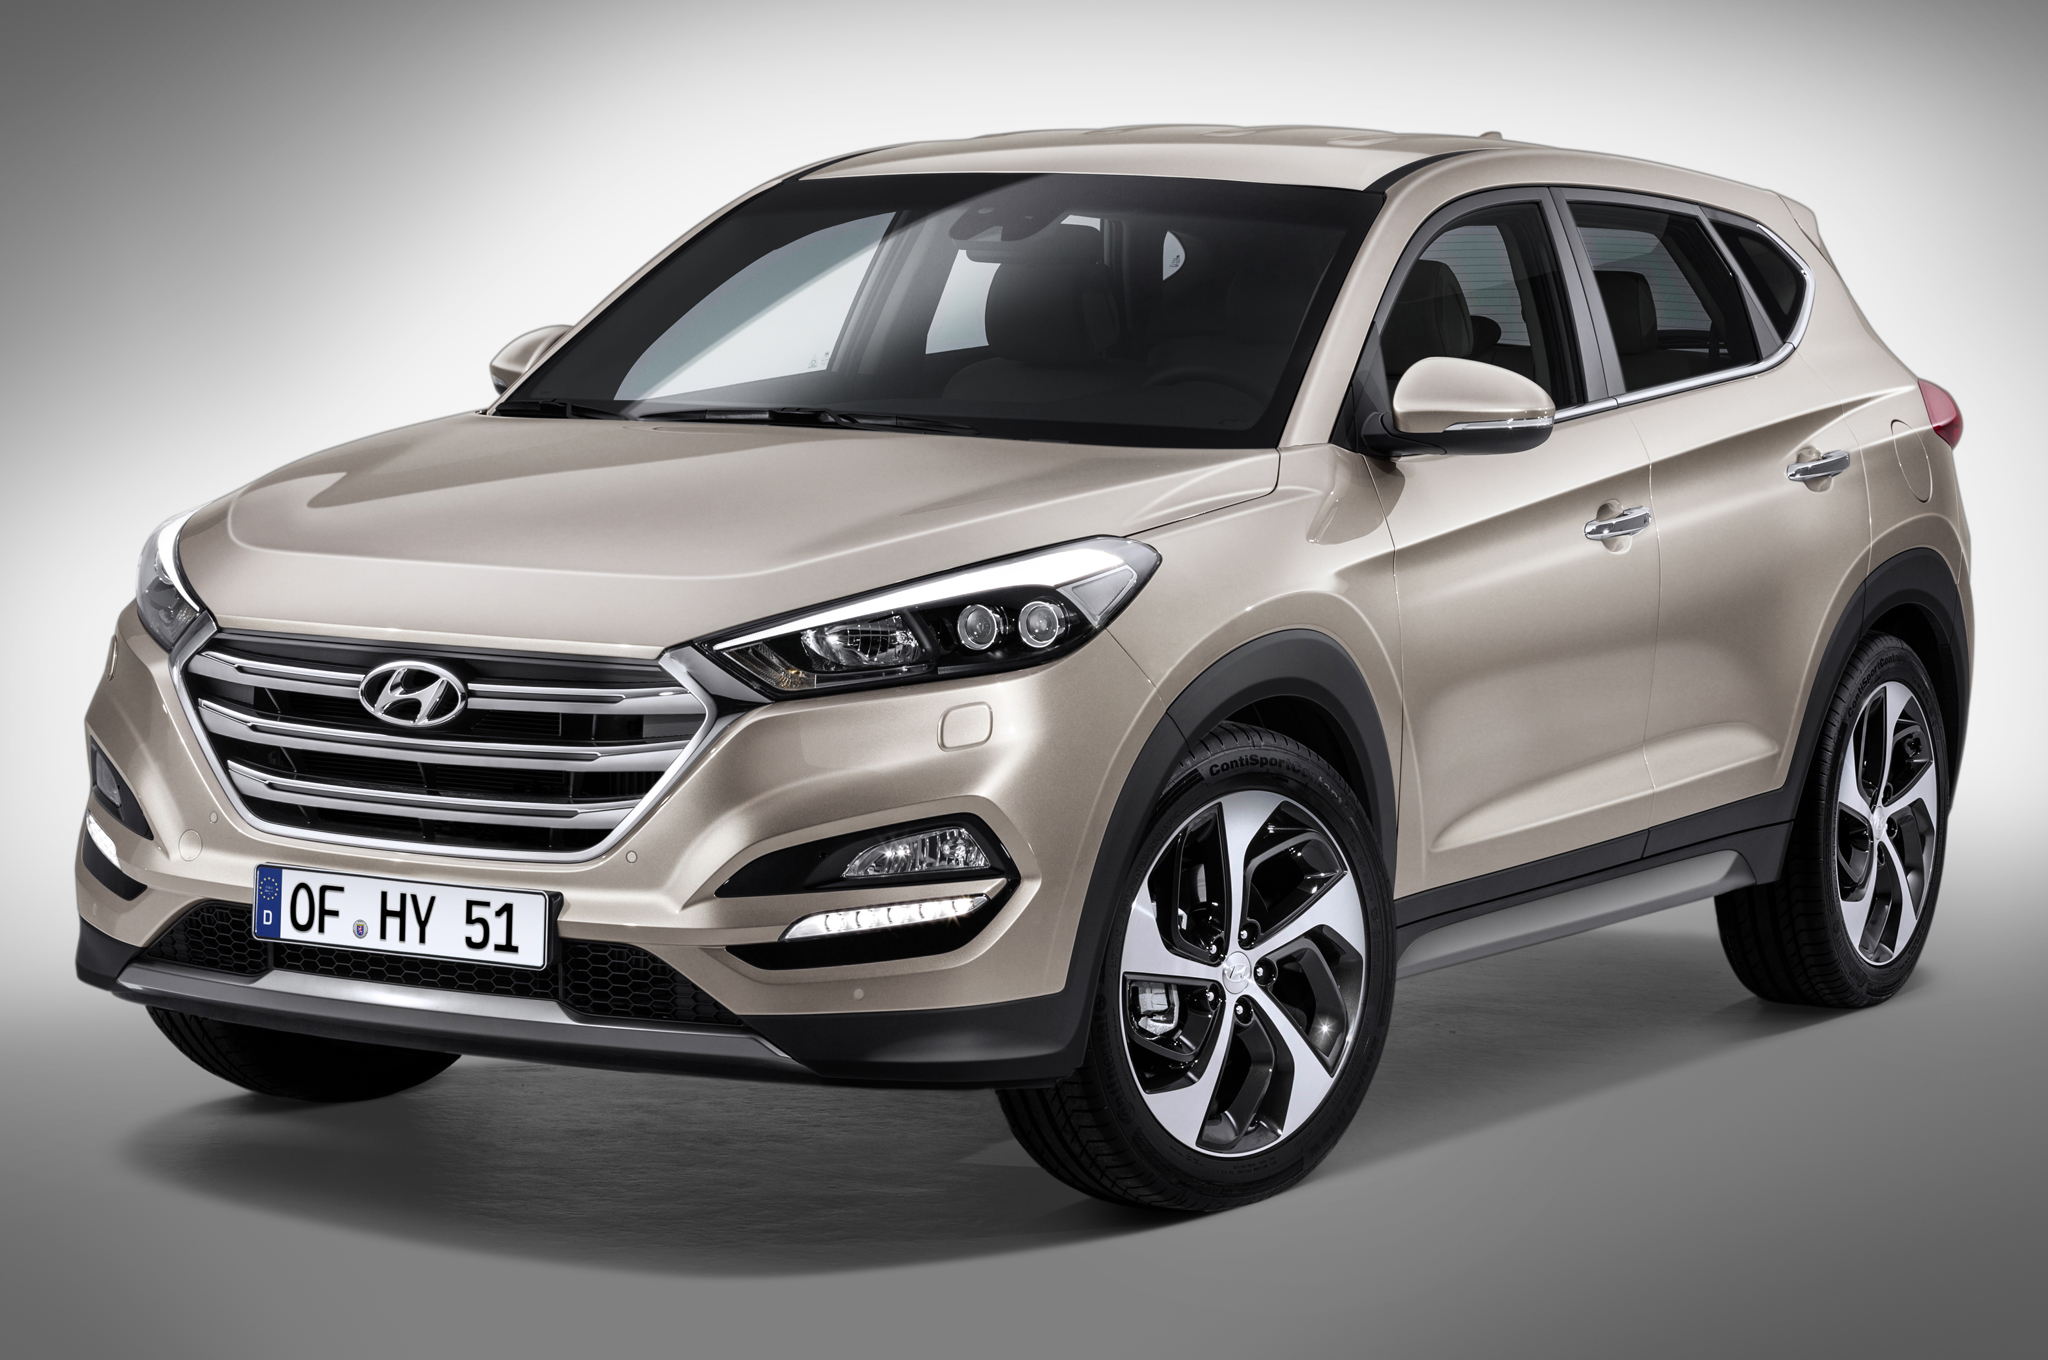 Pack led Hyundai tucson intérieur france xenon